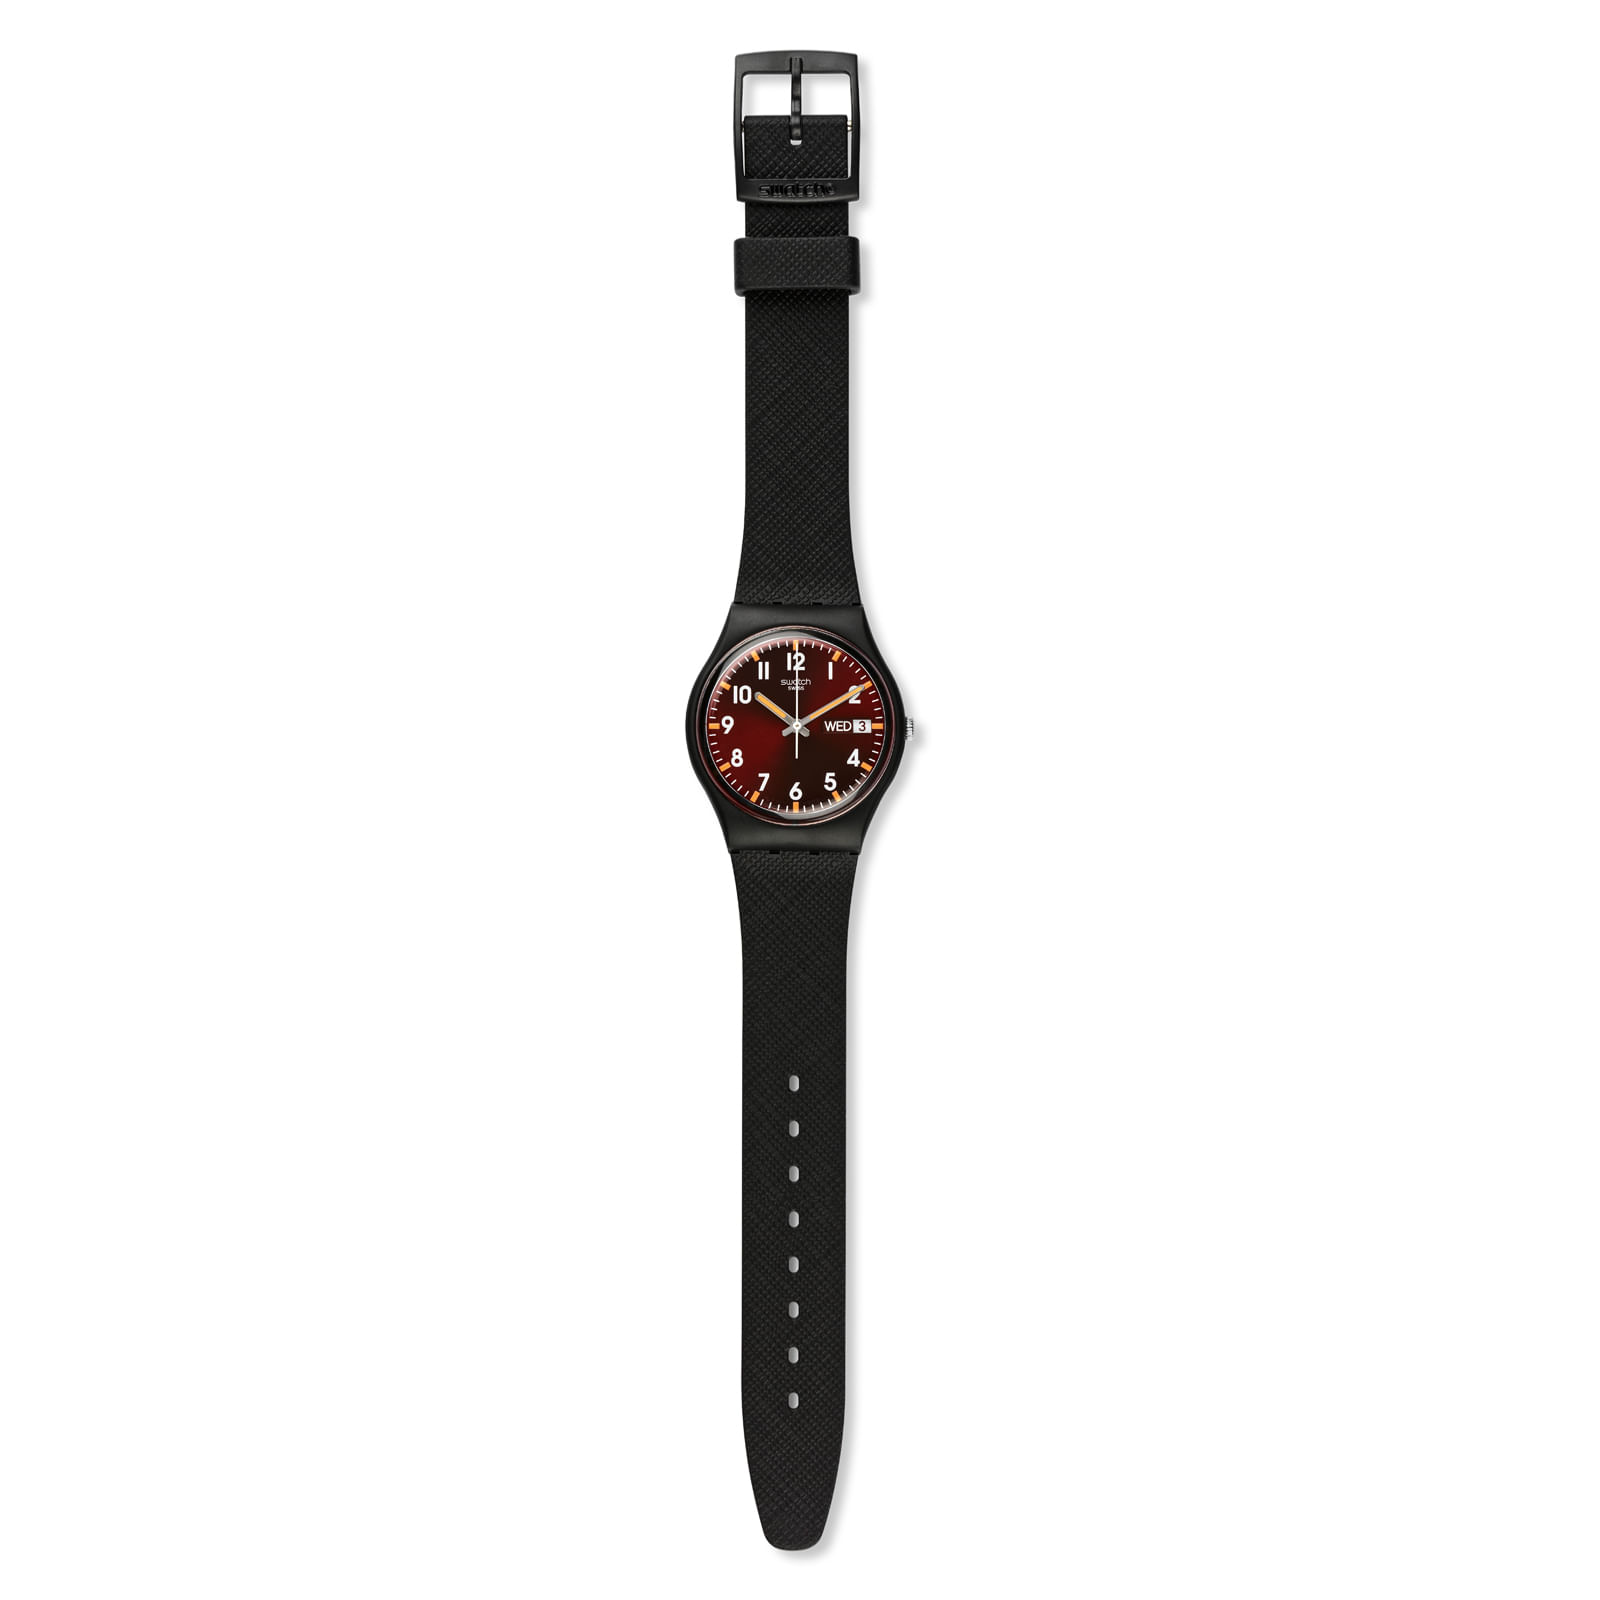 Reloj SWATCH SIR RED GB753 Negro